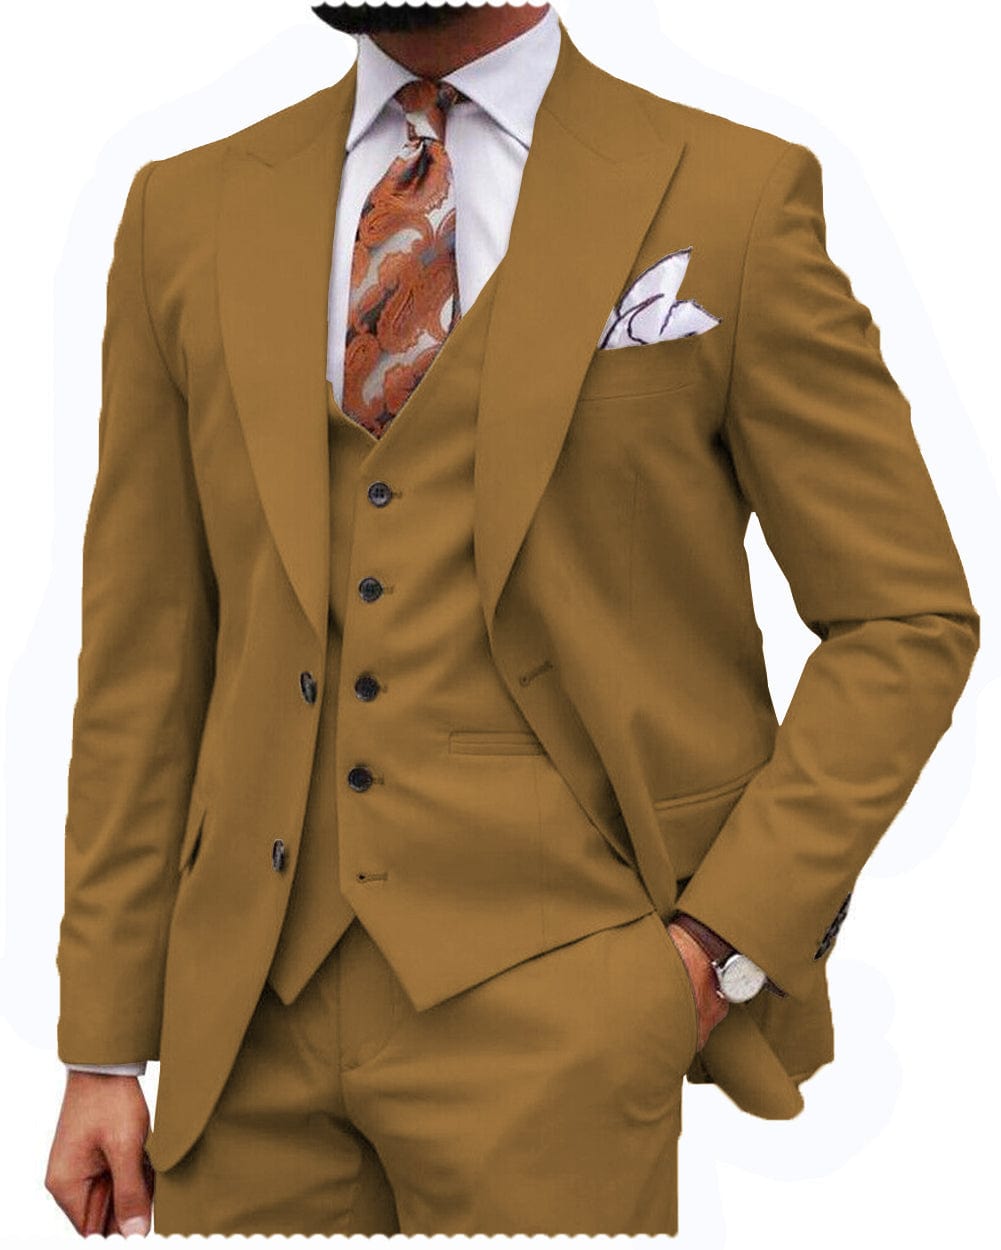 ceehuteey Formal Men's 3 Piece Regular Fit Peak Lapel Men's Express Suit (Blazer+Vest+Pants)